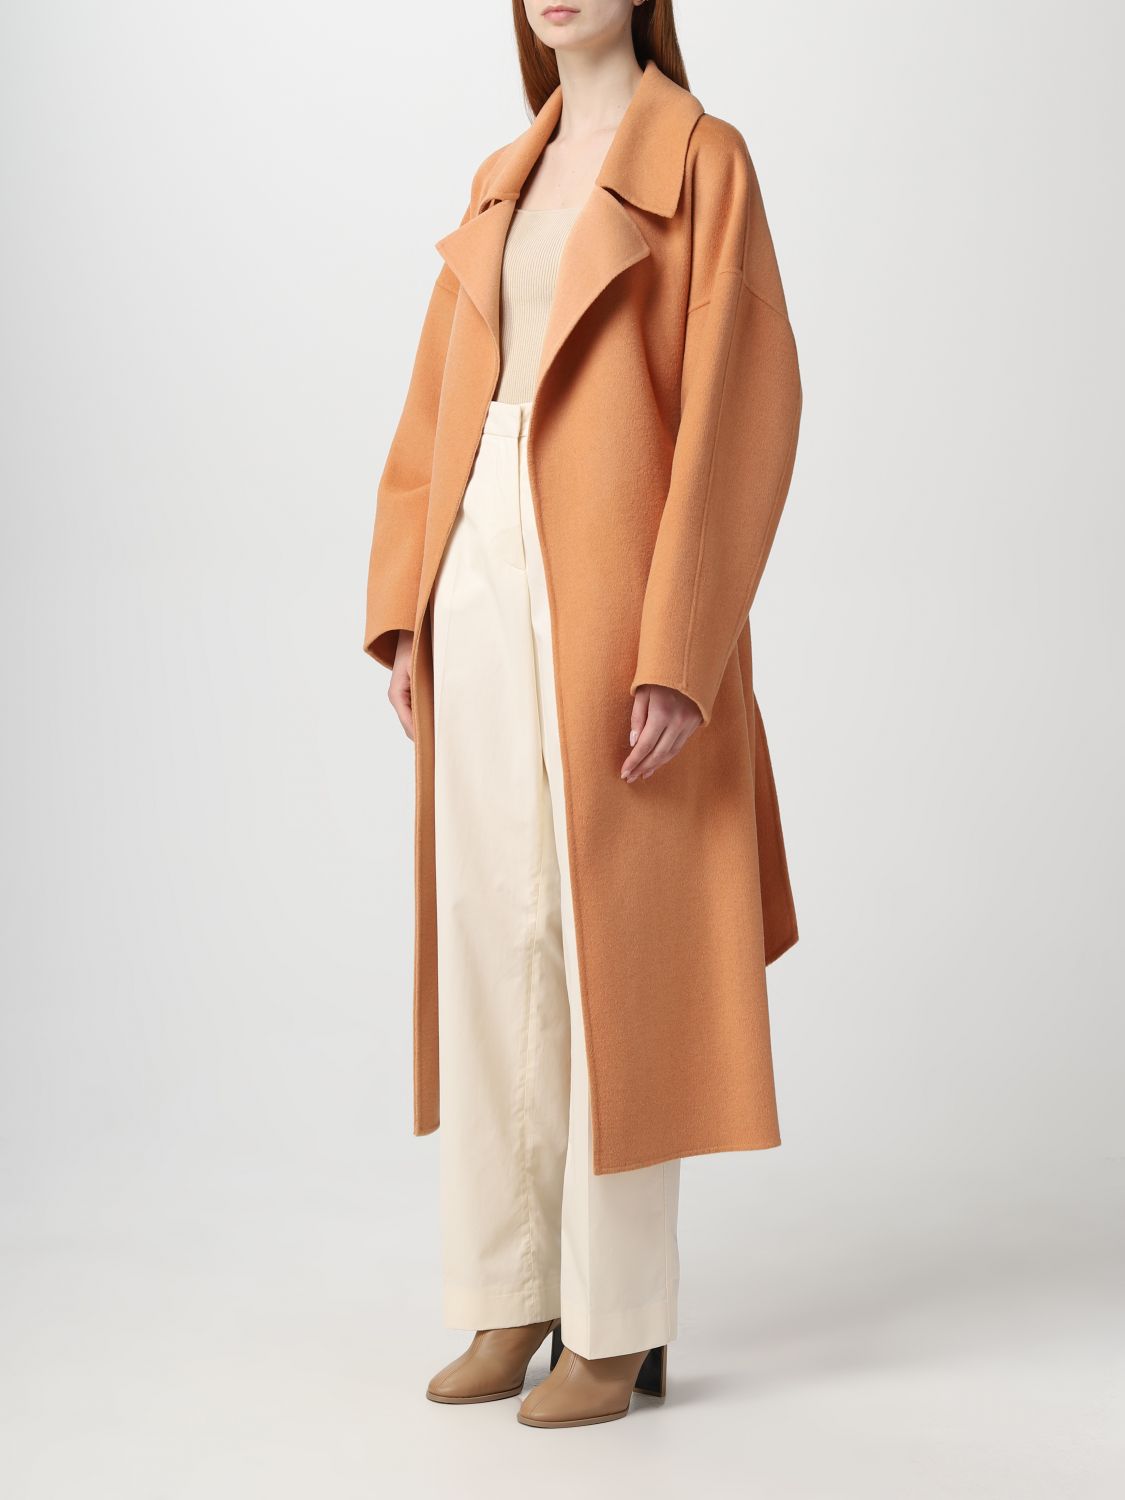 Namens Fluisteren Stijgen CALVIN KLEIN: coat for woman - Apricot | Calvin Klein coat K20K205006  online on GIGLIO.COM